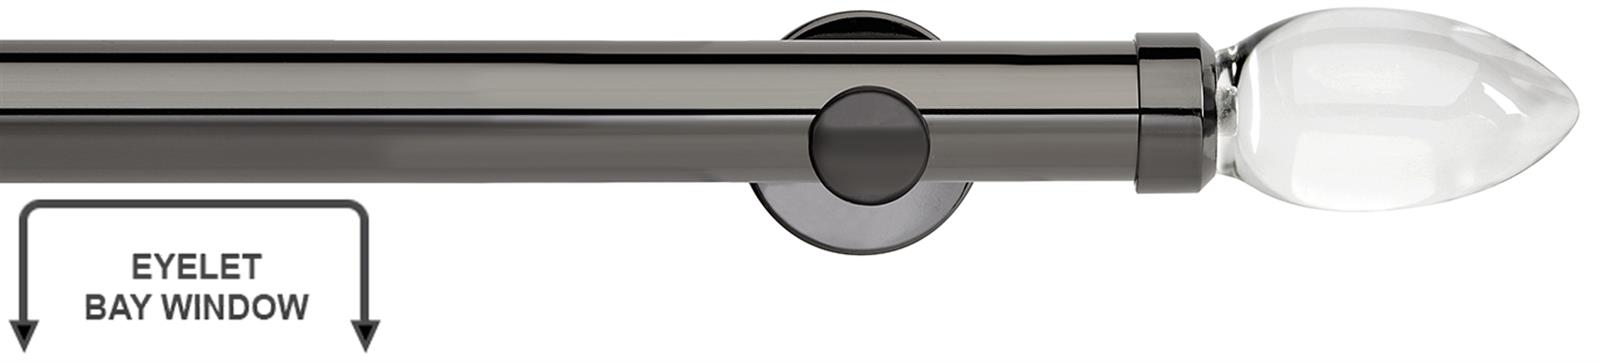 Neo Premium 35mm Eyelet Bay Window Pole Black Nickel Clear Glass Teardrop